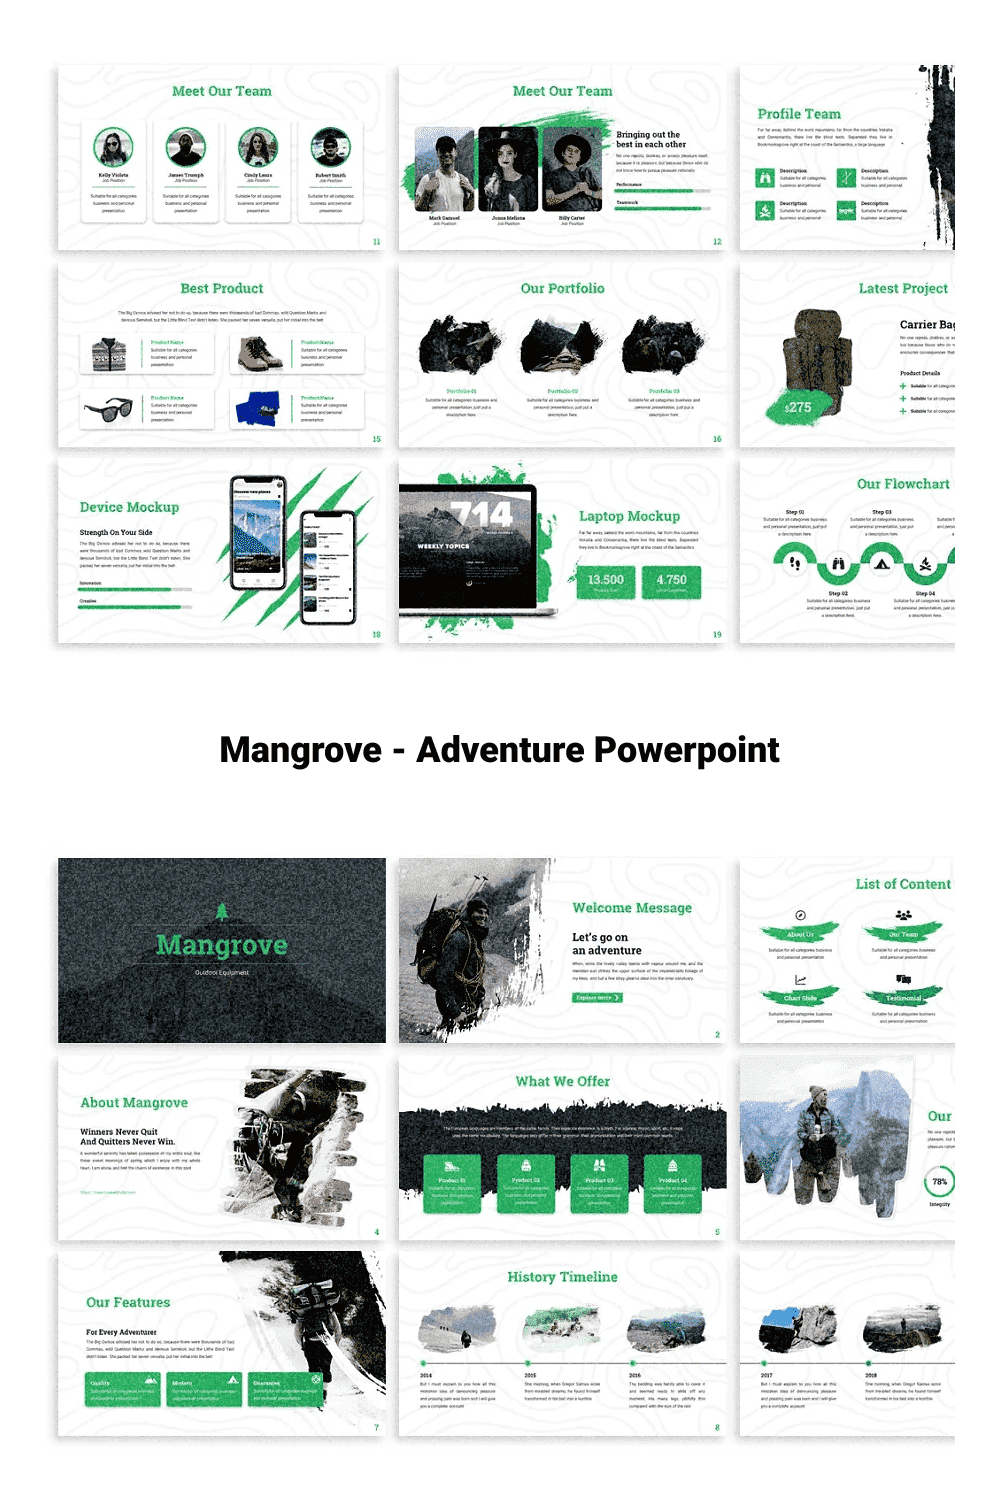 Mangrove - Adventure Powerpoint - "Let's Go On An Adventure".